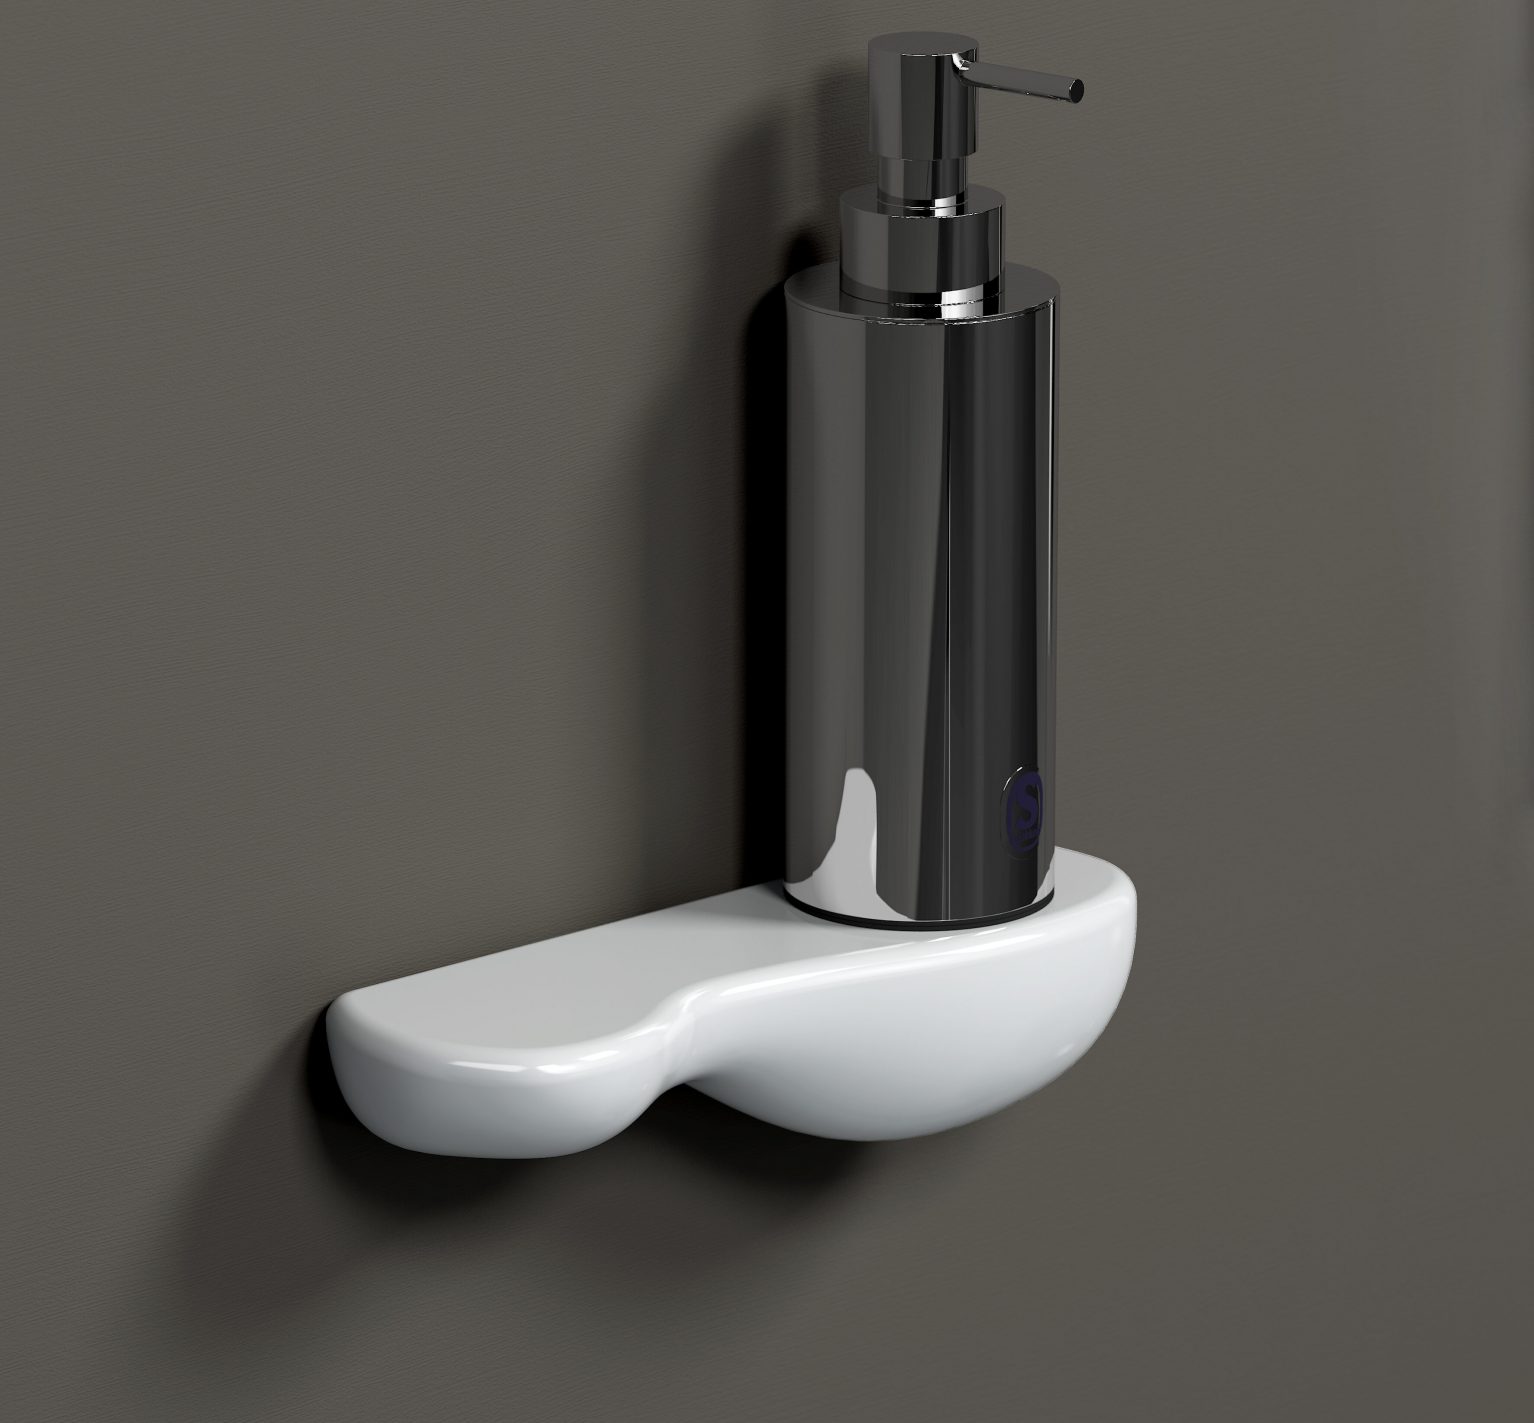 planchet-accessoires-wit-keramiek-toilet-badkamer-luxe-sanitair-Cliff-clou-CL0900001-klein-plankje-planchetje-Sp-shadow